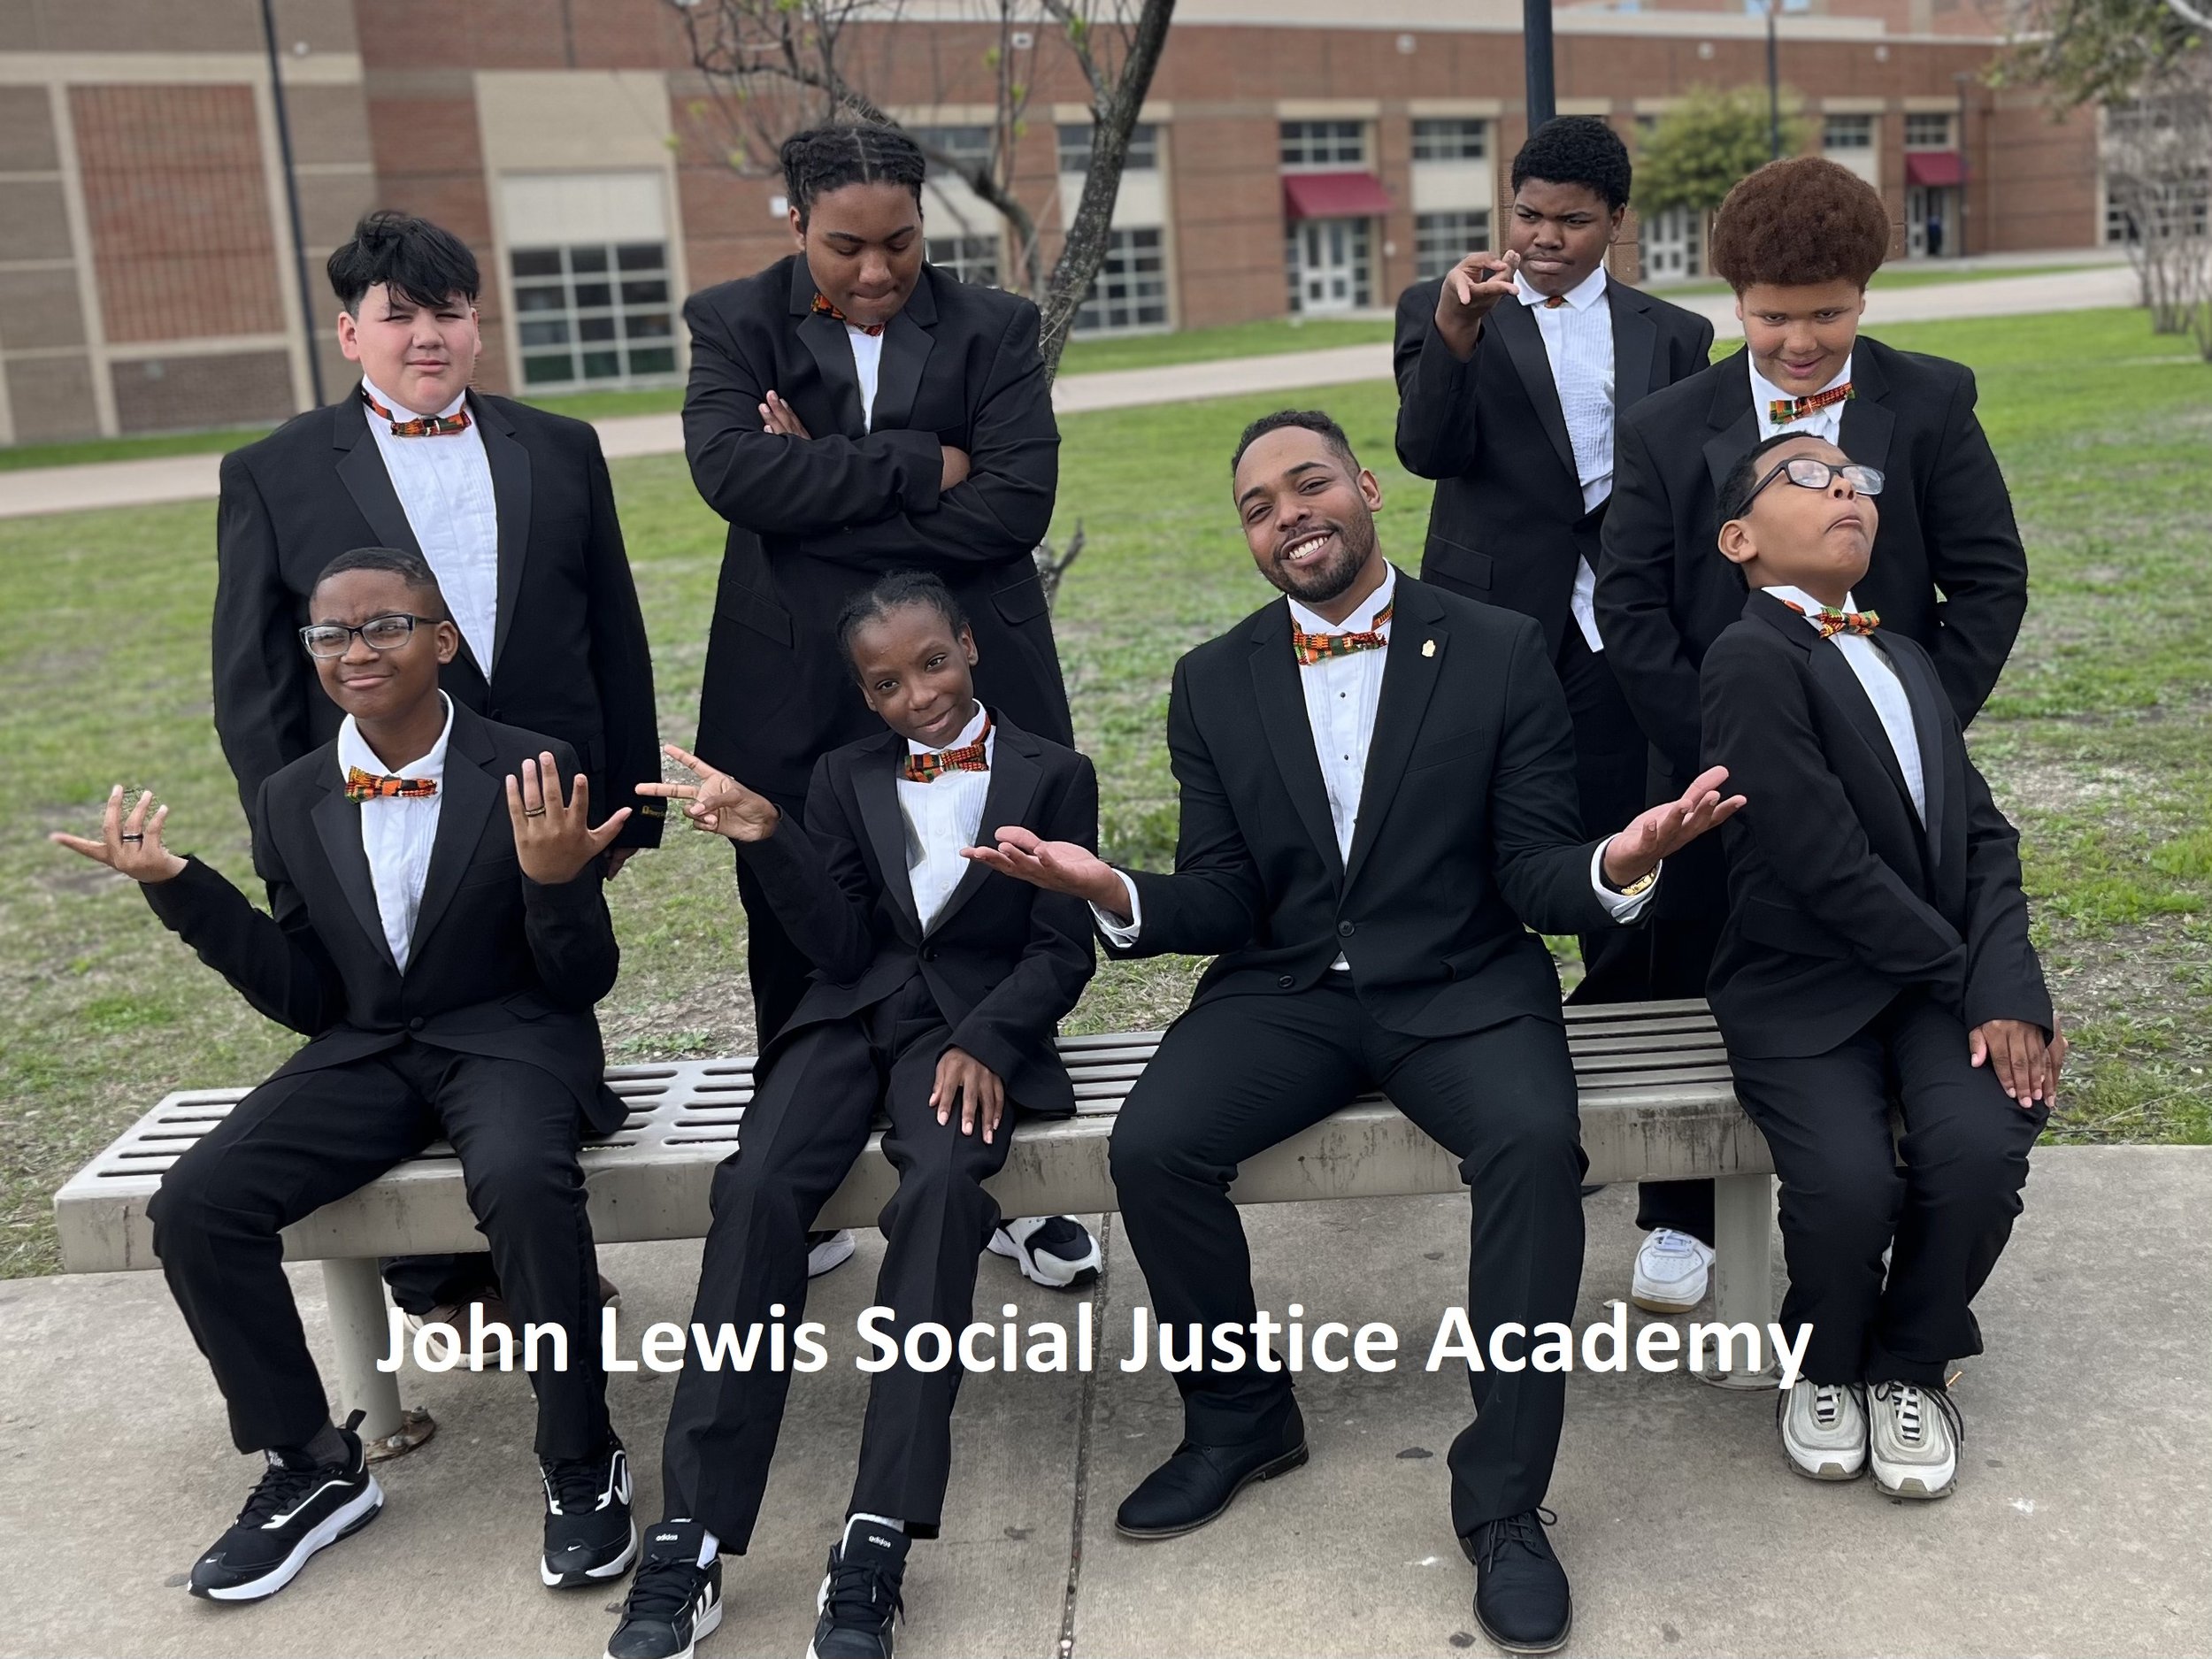 John Lewis Social Justice Academy